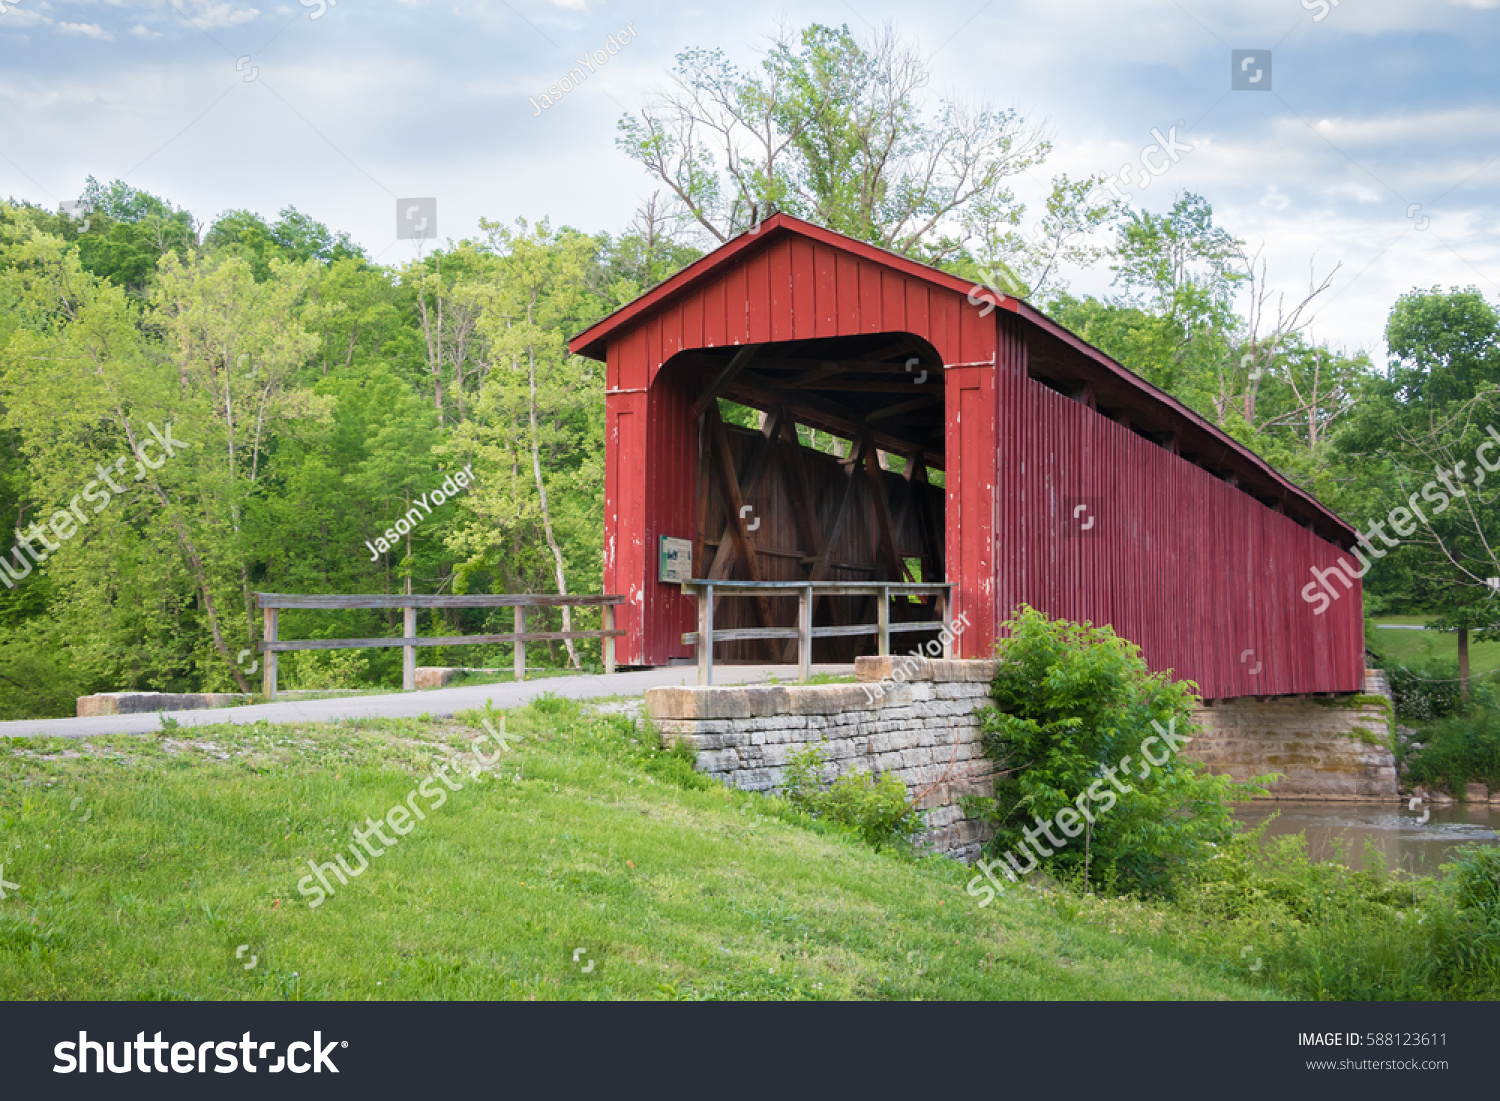 Covered bridge, Cataract falls Indiana #588123611